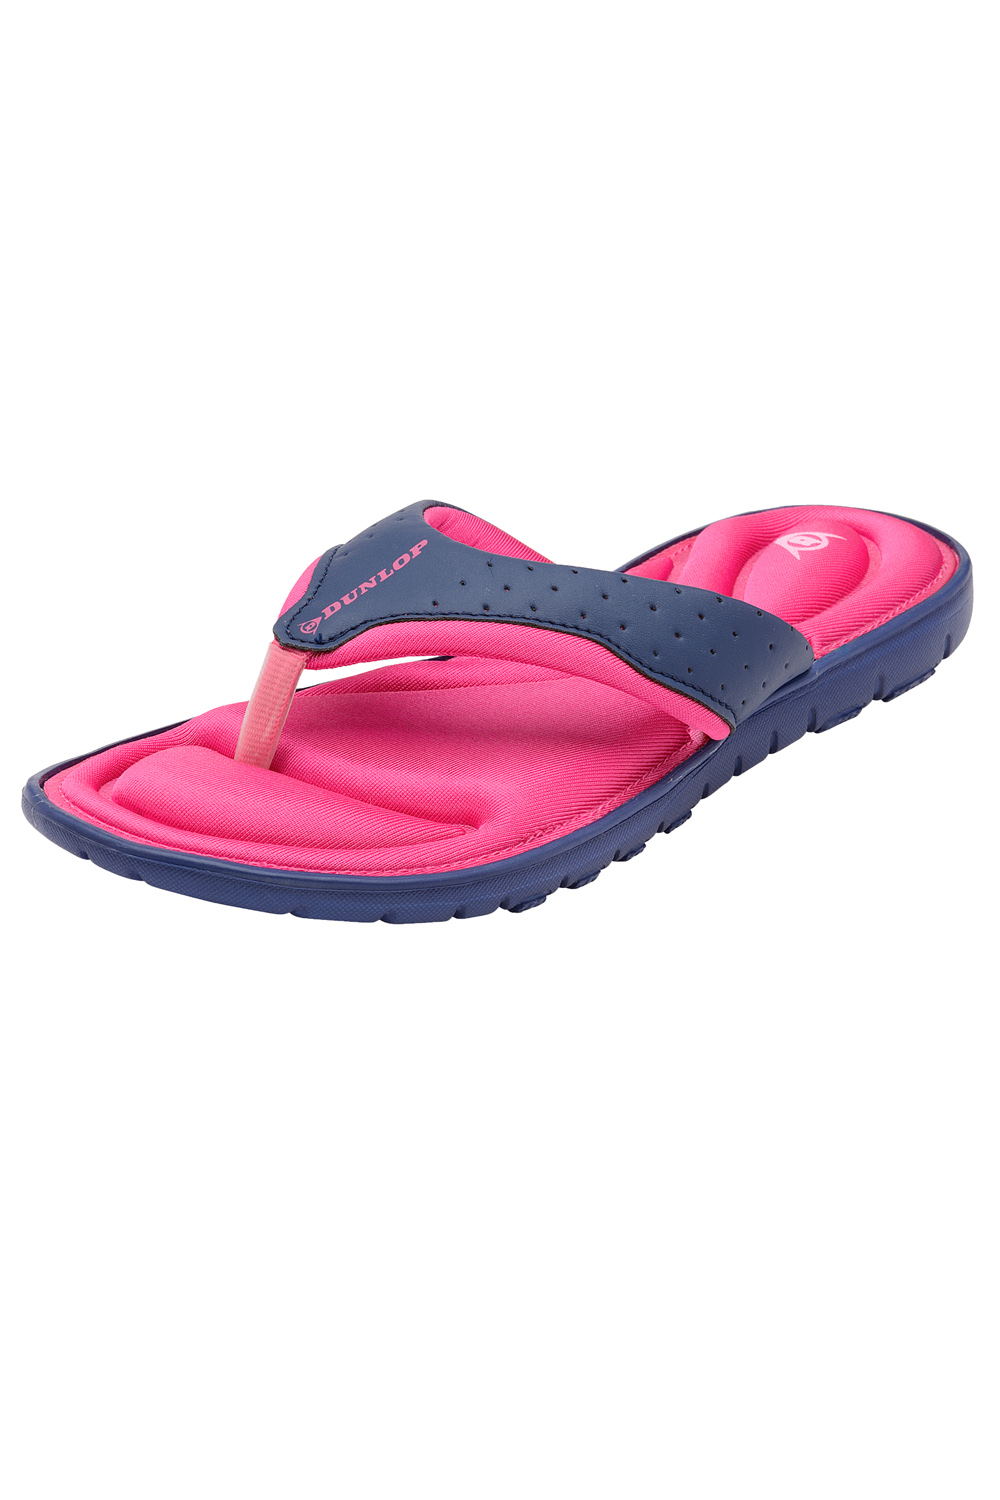 memory foam sandals for ladies